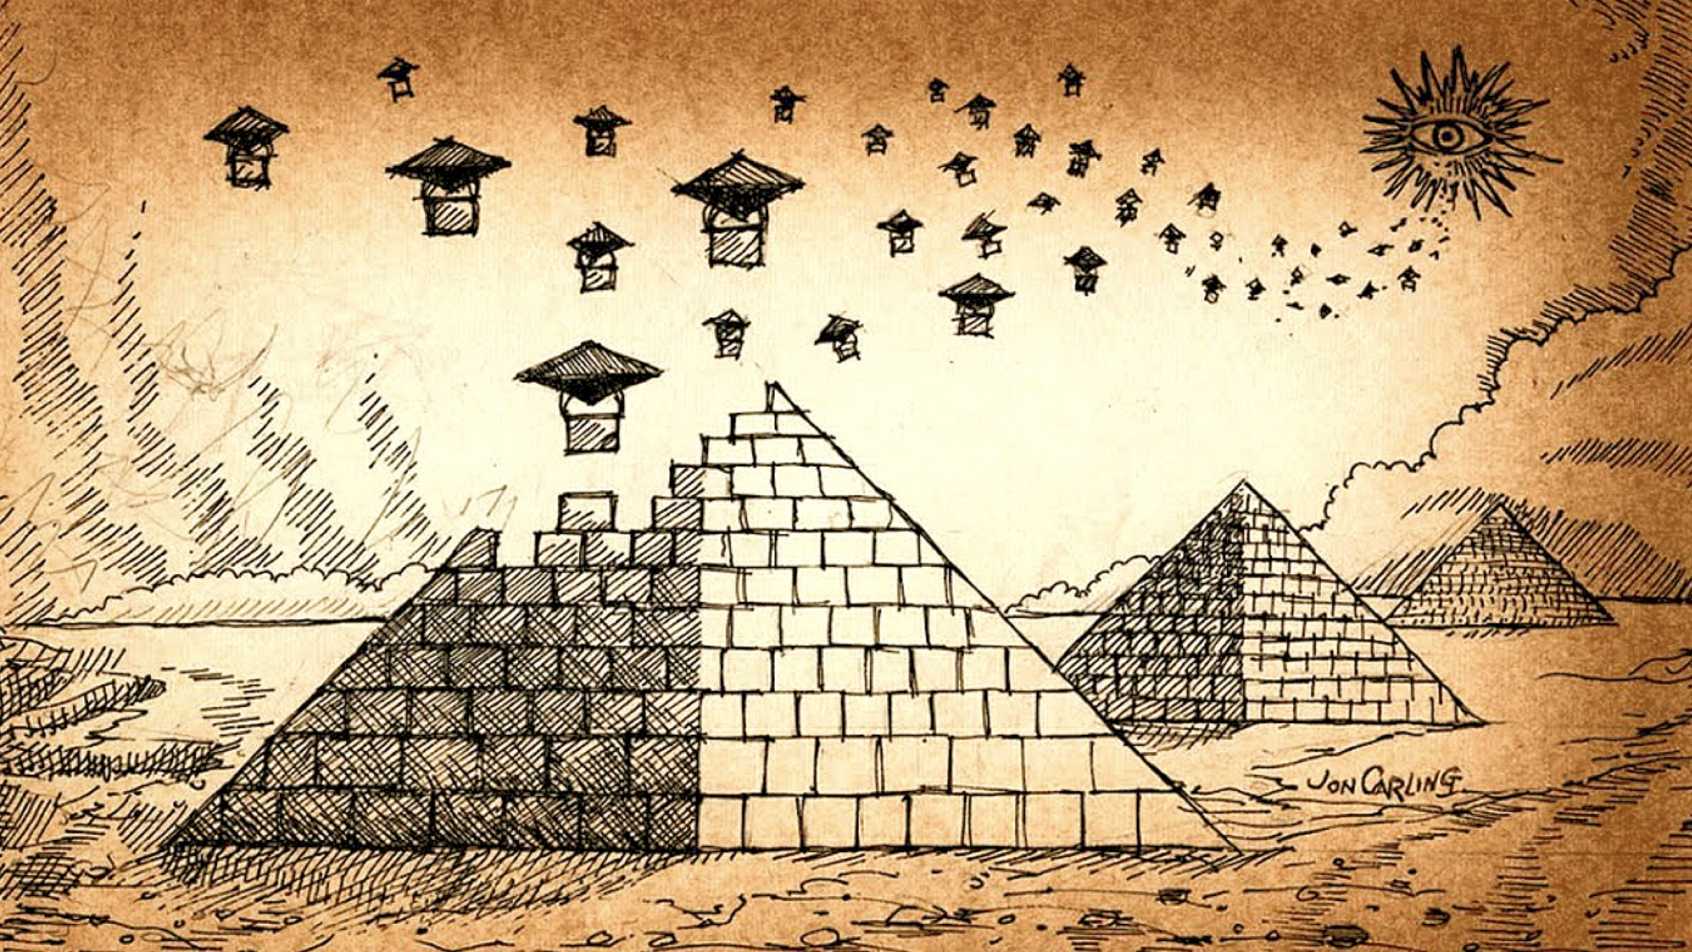 Pembinaan piramid